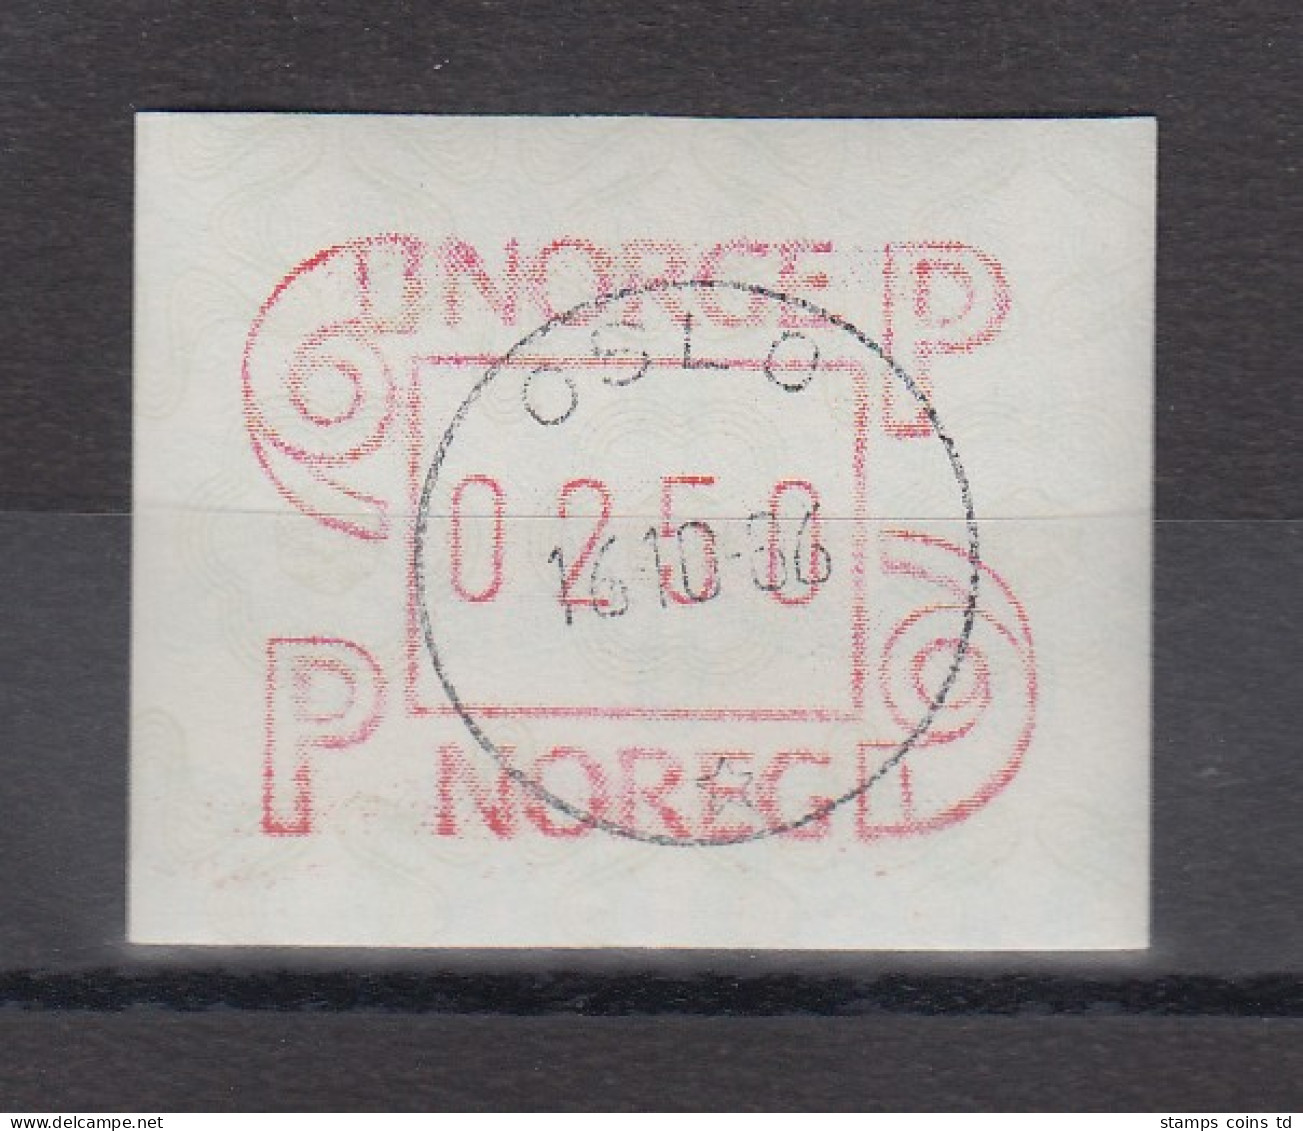 Norwegen 1986 FRAMA-ATM Mi.-Nr. 3.1b Portowert 250 Mit ET-O OSLO 16.10.86 - Automaatzegels [ATM]